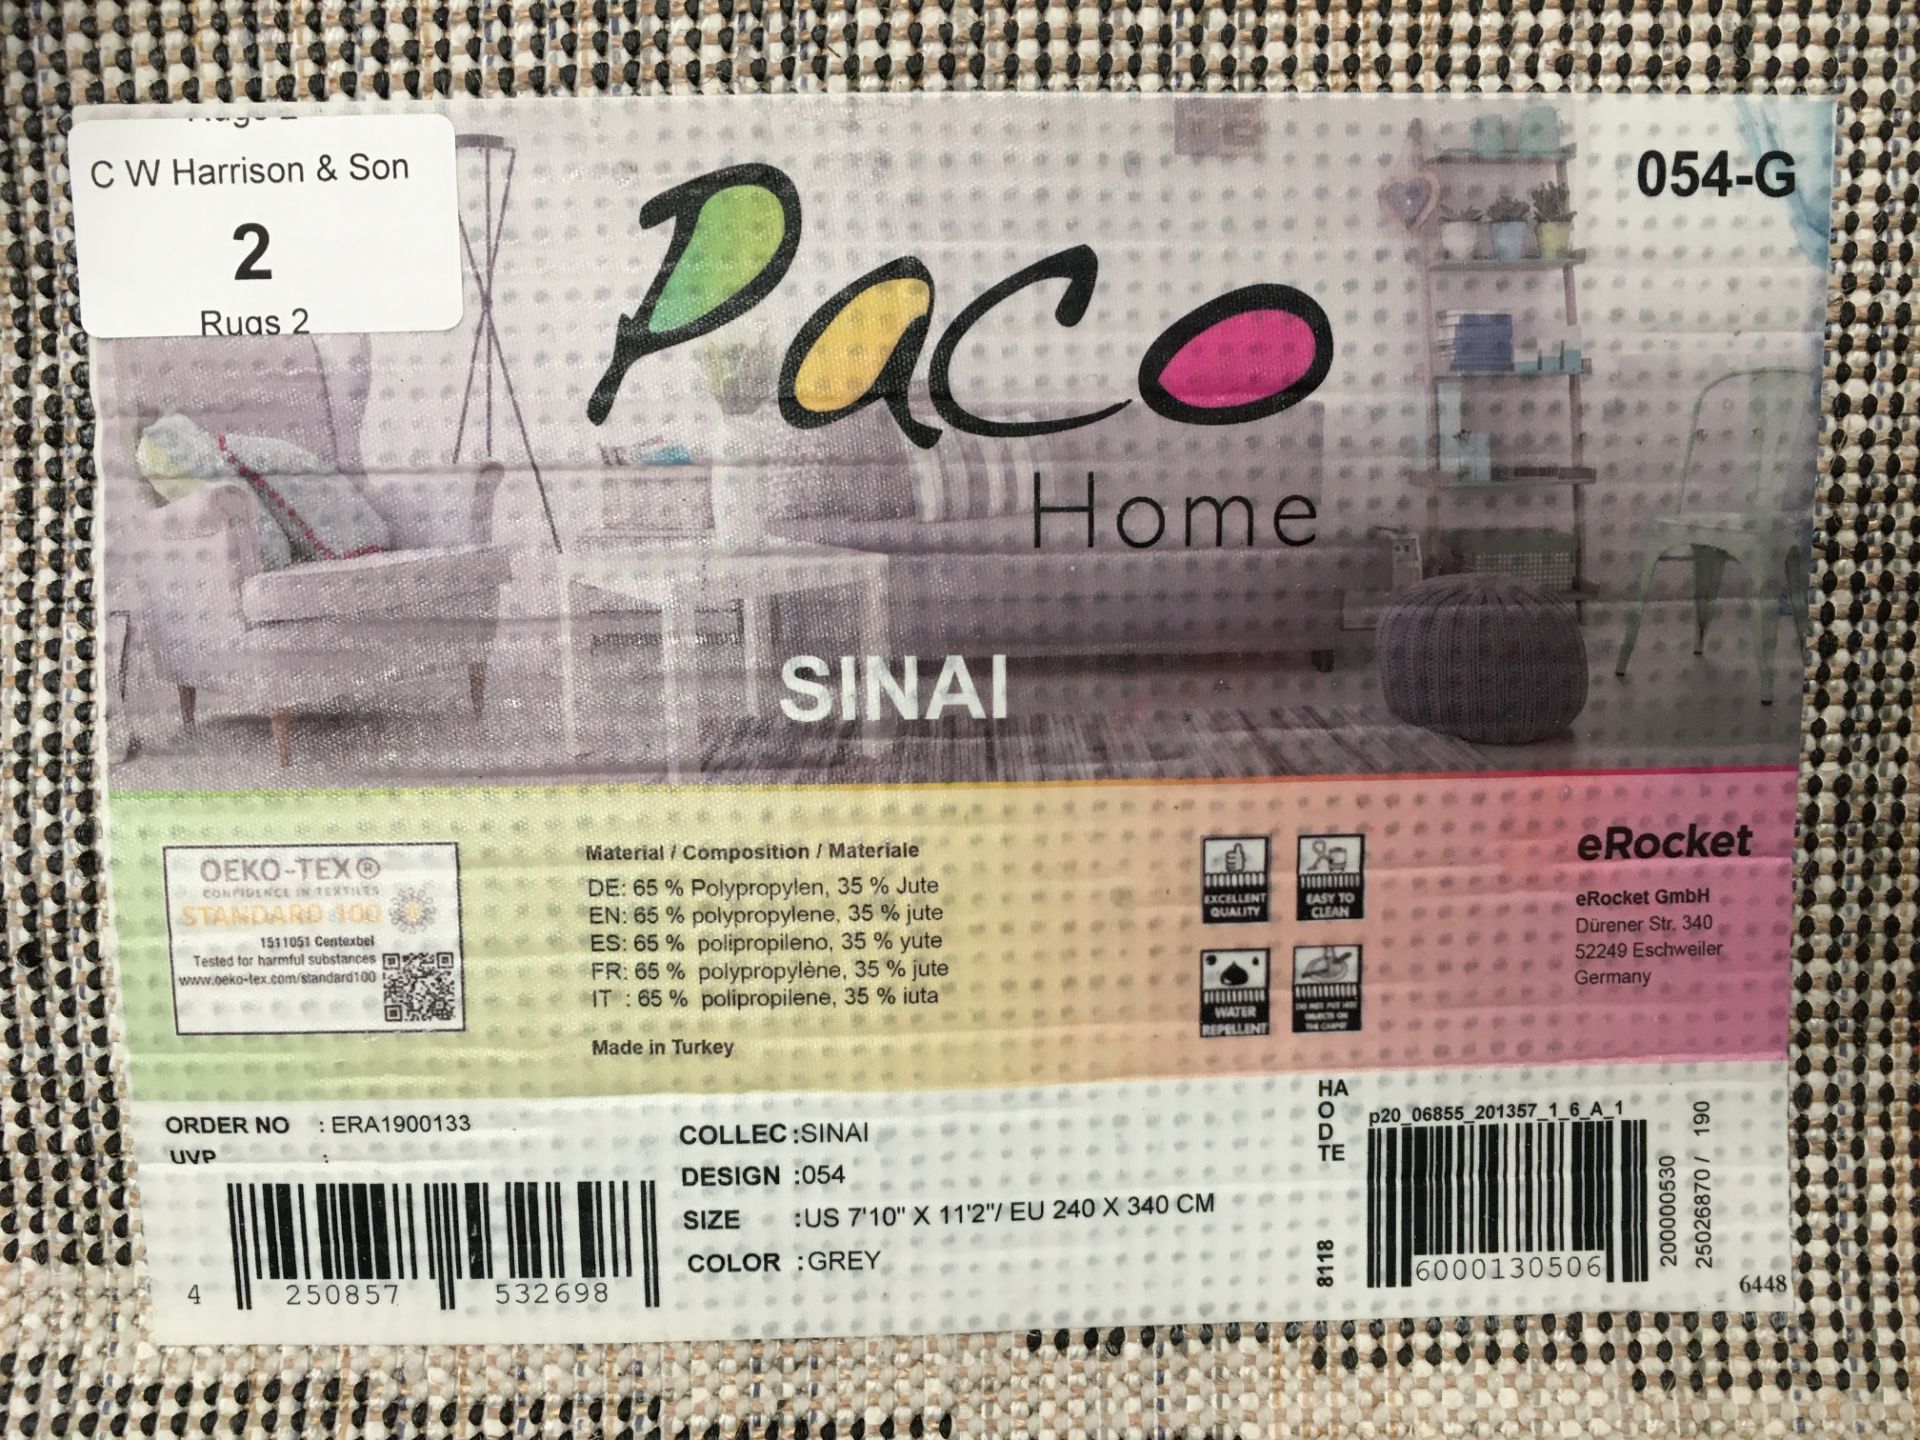 A Paco Home Sinai 054 grey rug - 240cm x 340cm - Image 2 of 2